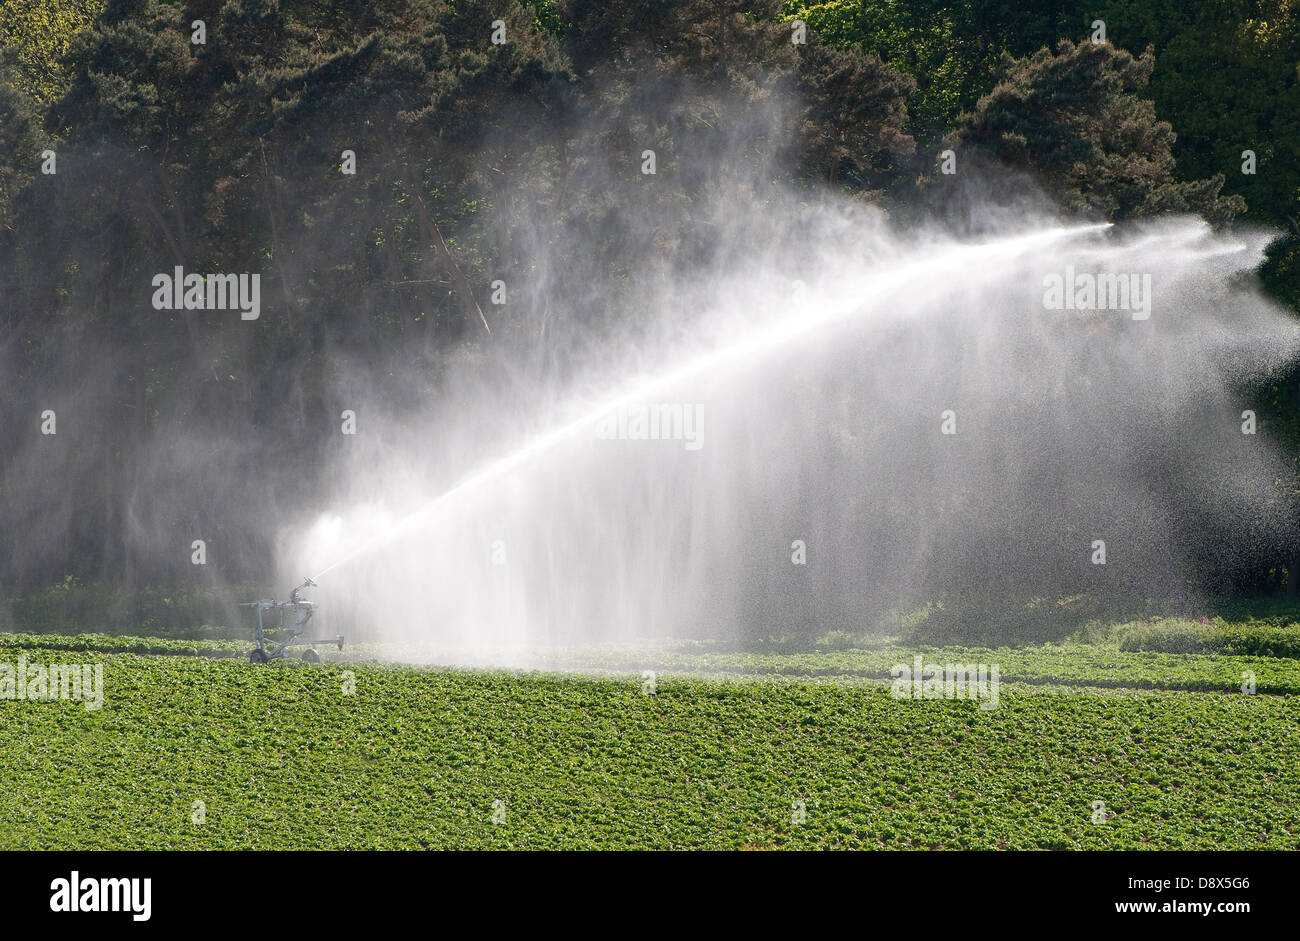 watering potato crop, norfolk, england Stock Photo